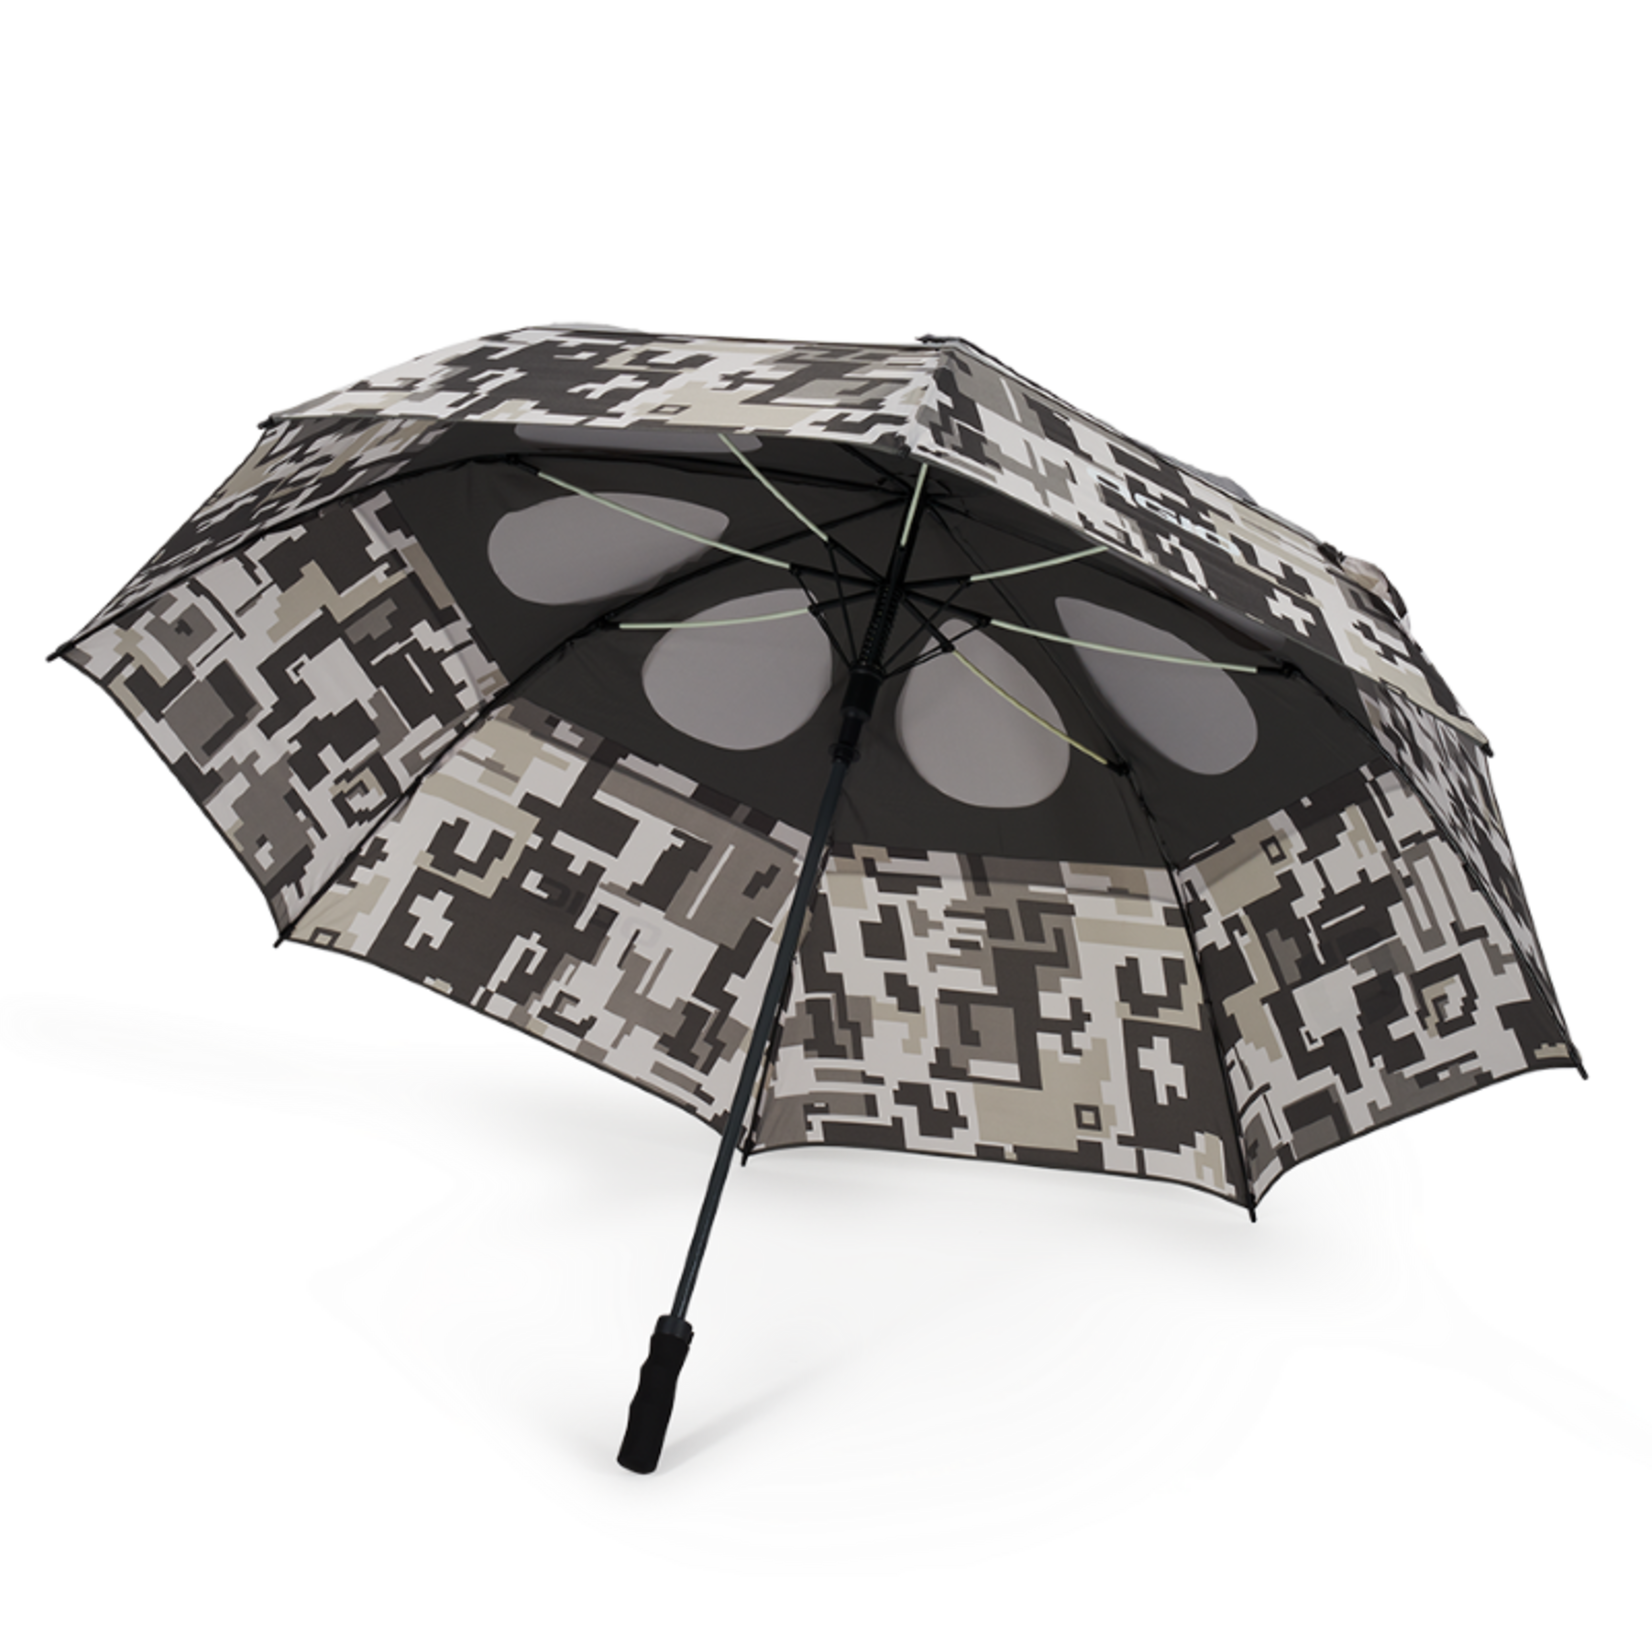 Ogio Ogio Double Canopy Umbrella - Cyber Camo